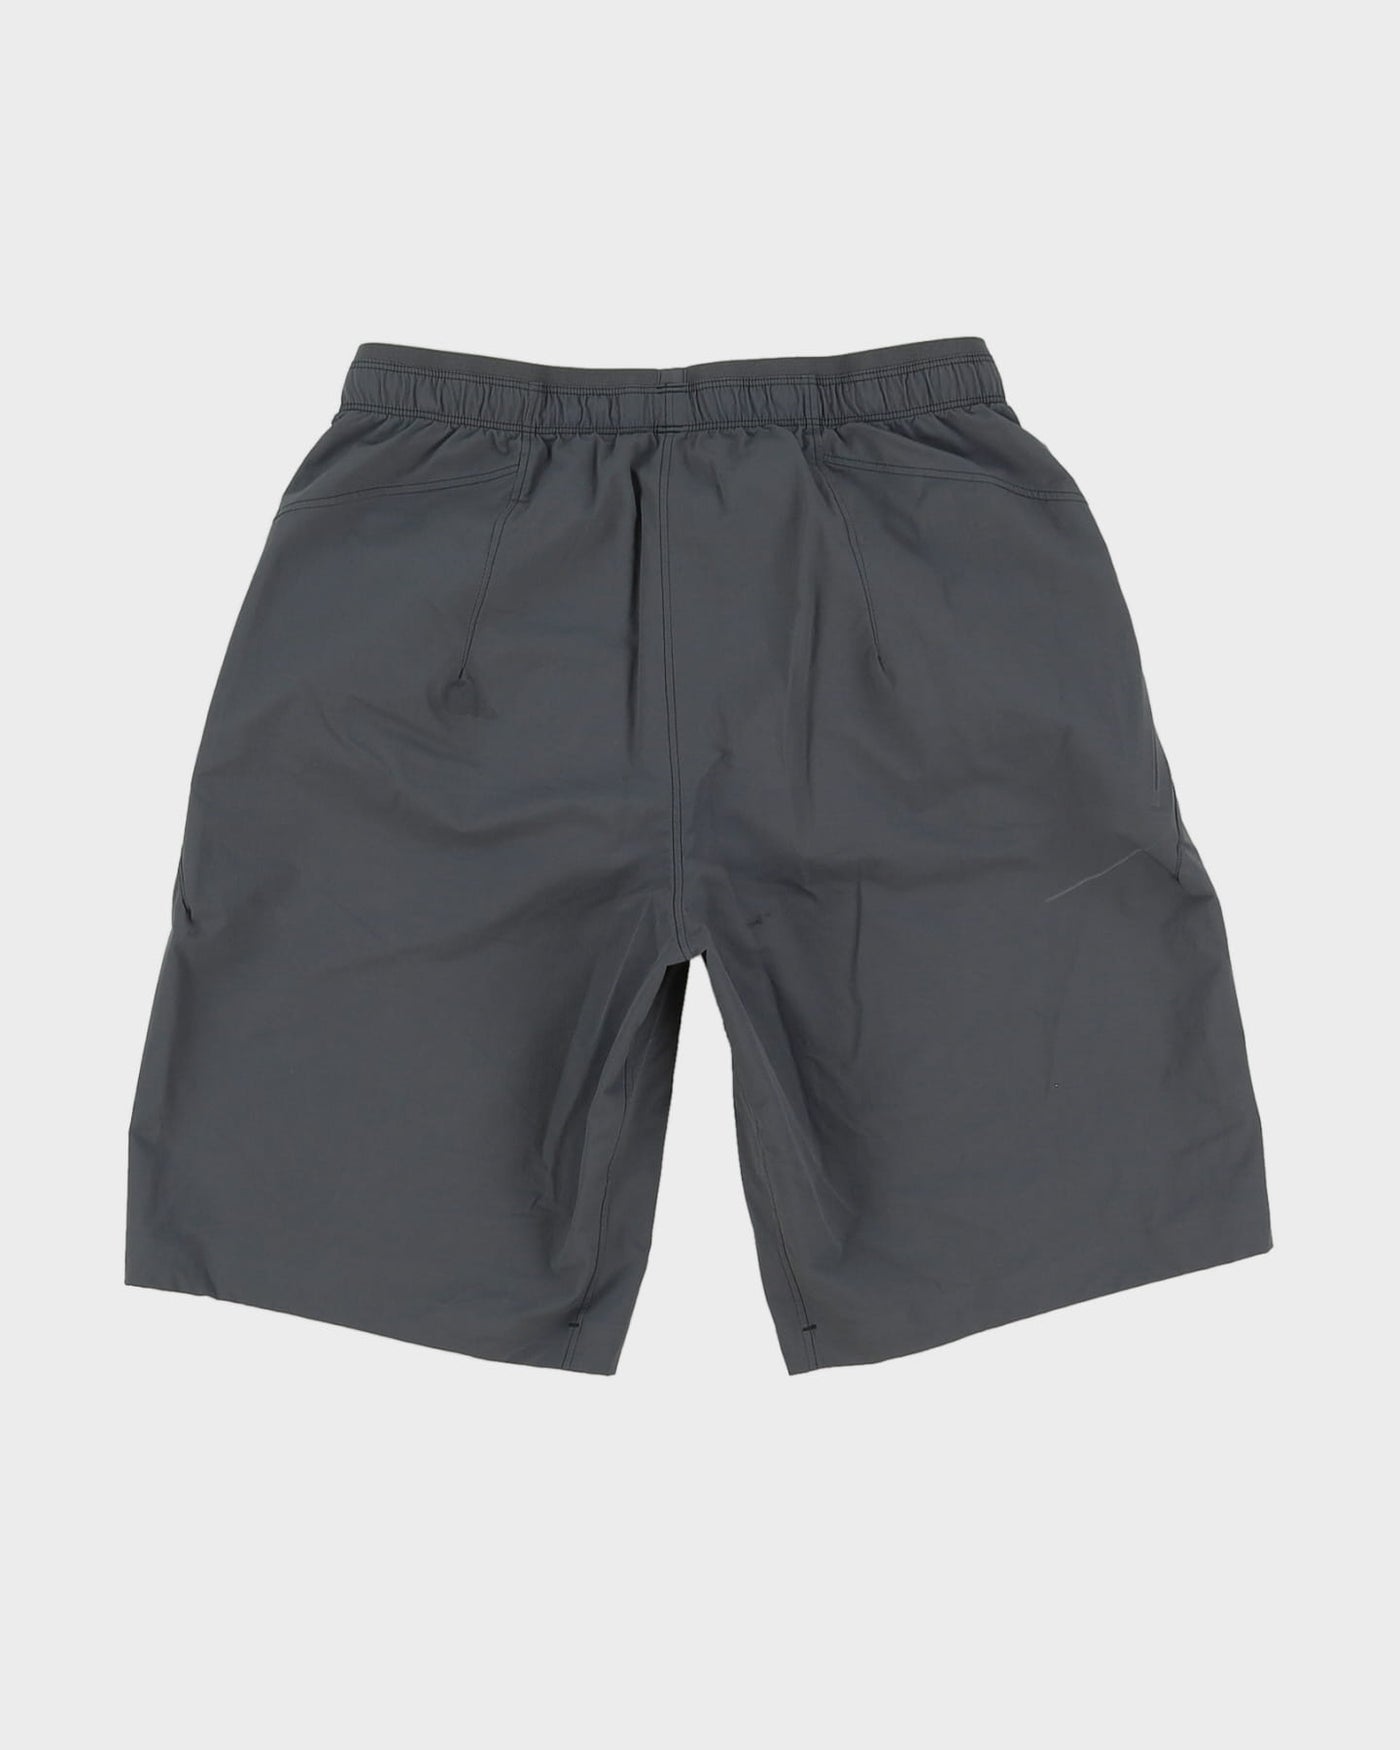 Arc'Teryx Grey Tech / Utility Shorts - S